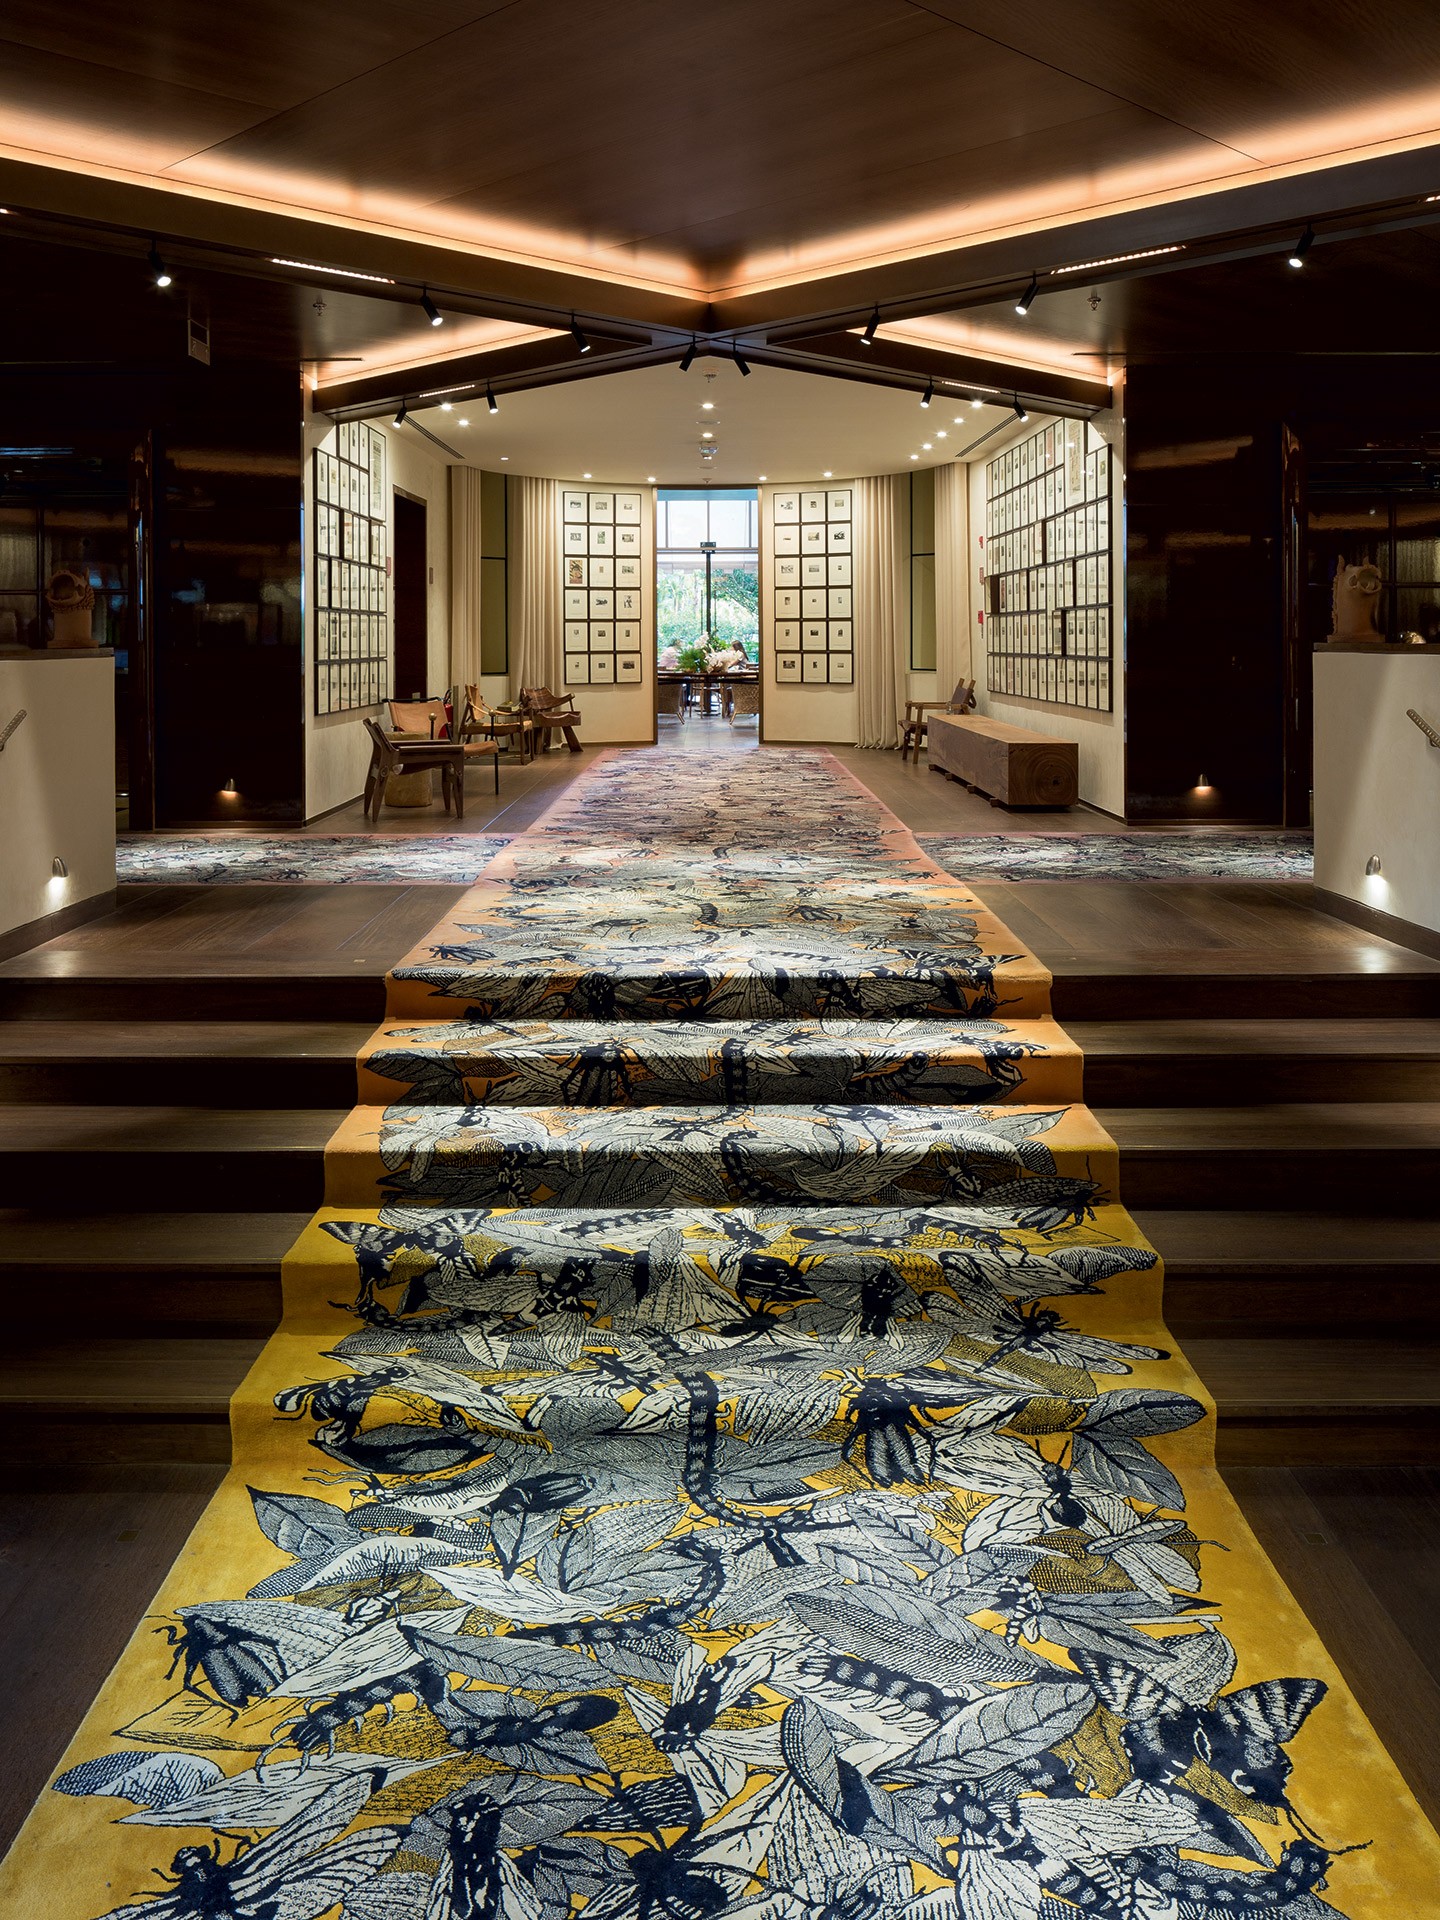 Phillipe Starck assina os interiores do luxuoso hotel Rosewood em São Paulo (Foto: Filippo Bamberghi)